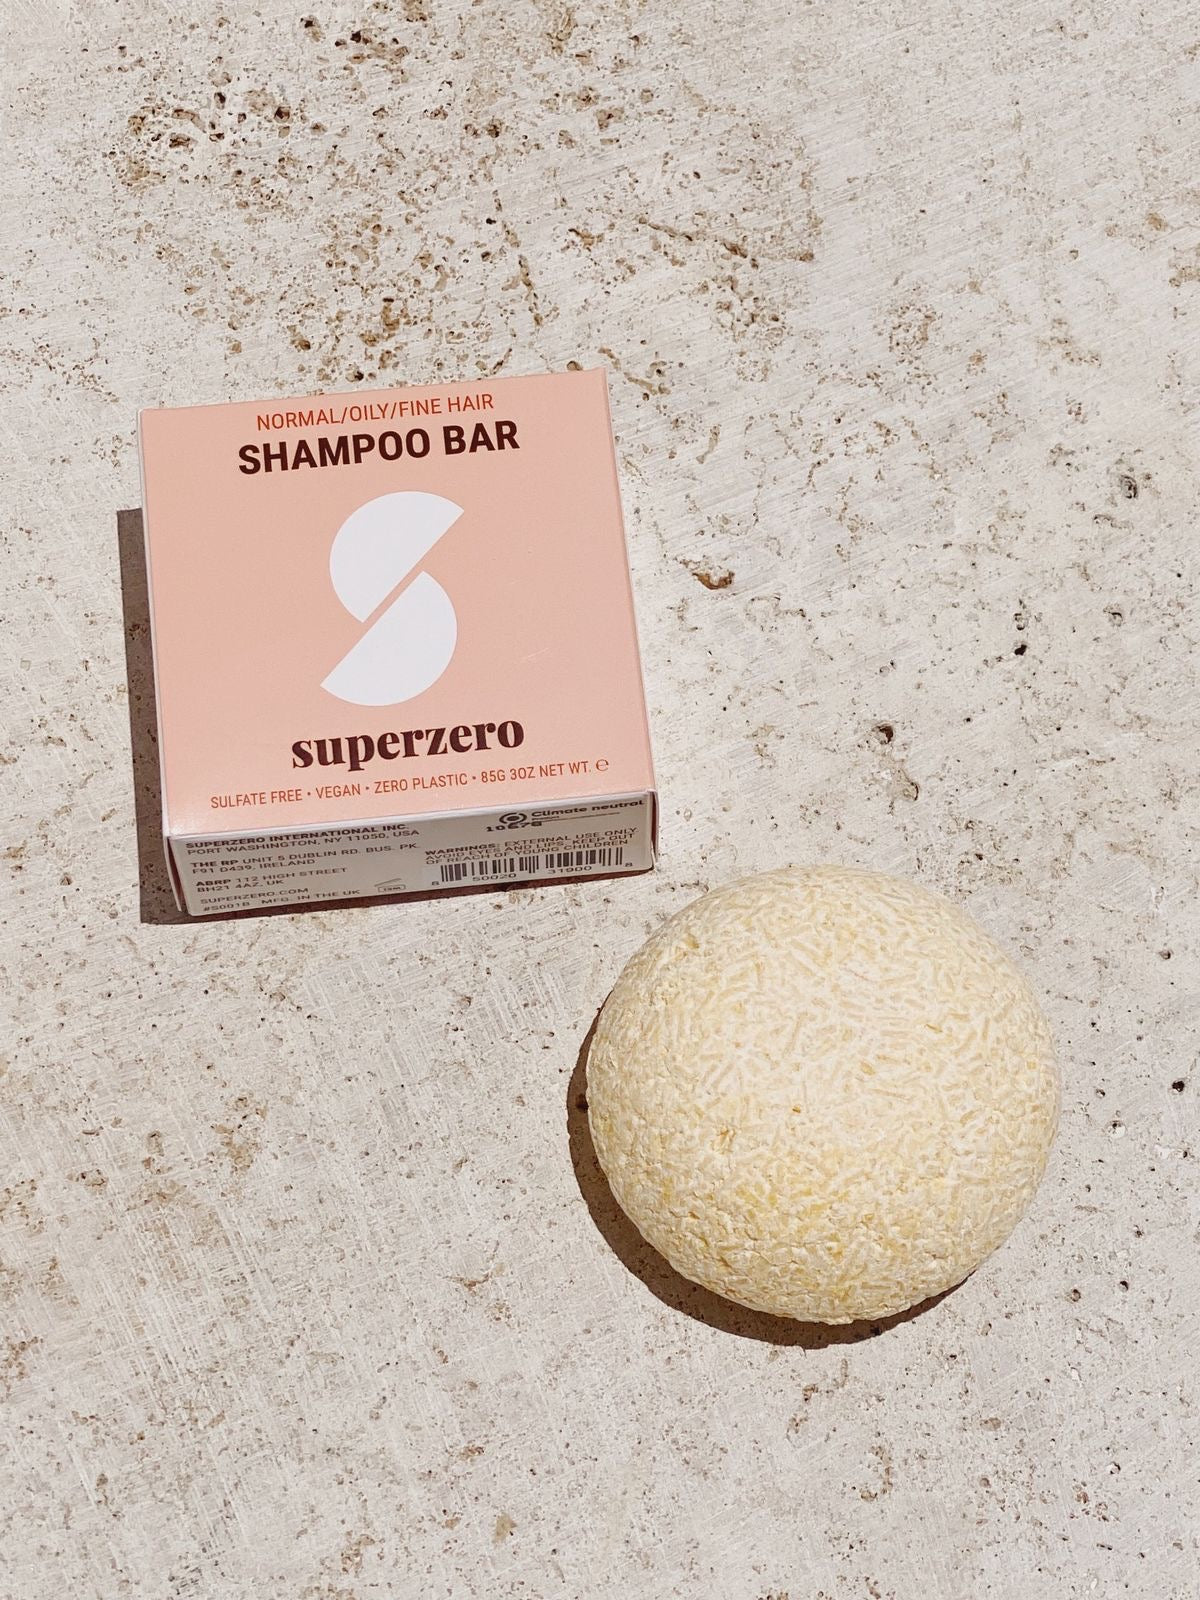 shampoo bar by superzero